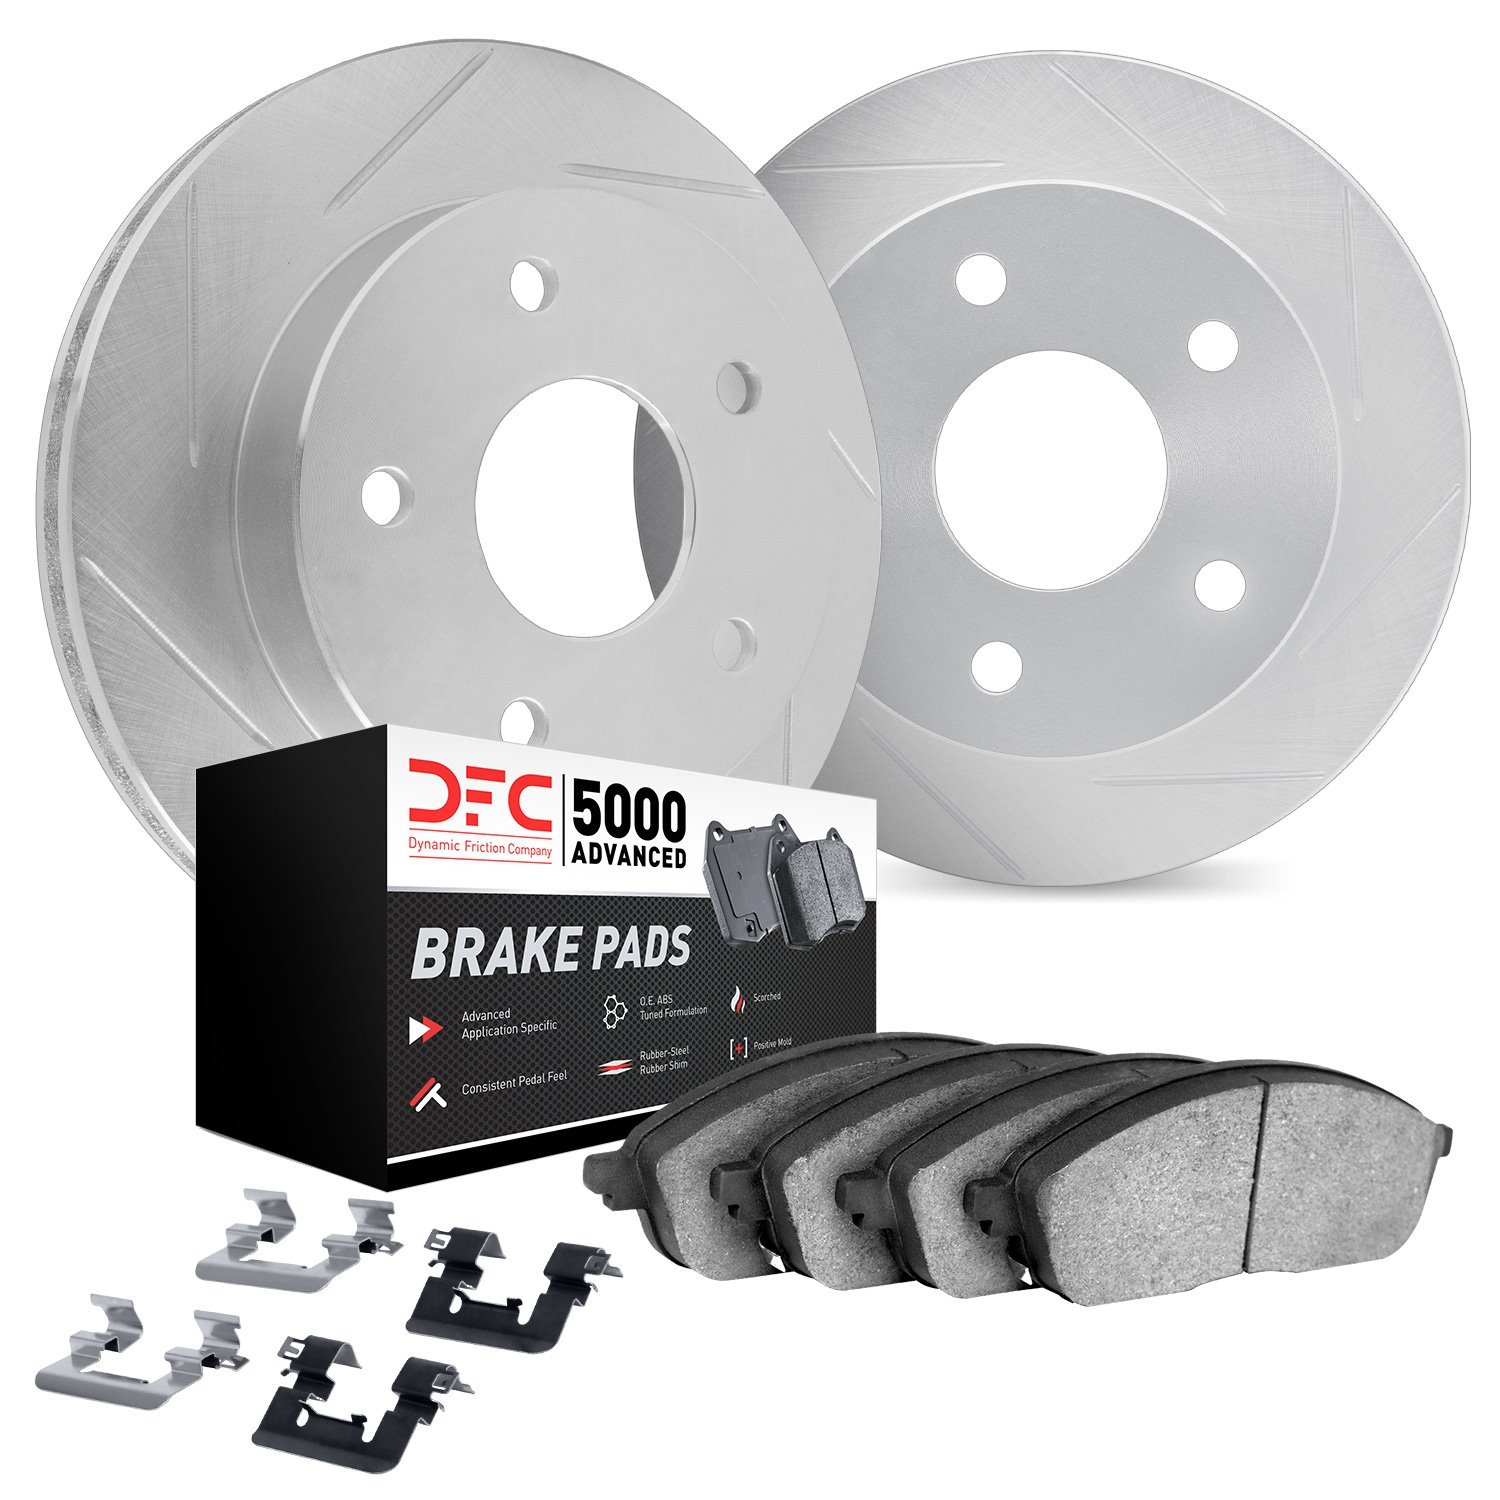 5512-67101 Slotted Brake Rotors w/5000 Advanced Brake Pads Kit & Hardware [Silver], Fits Select Multiple Makes/Models, Position: